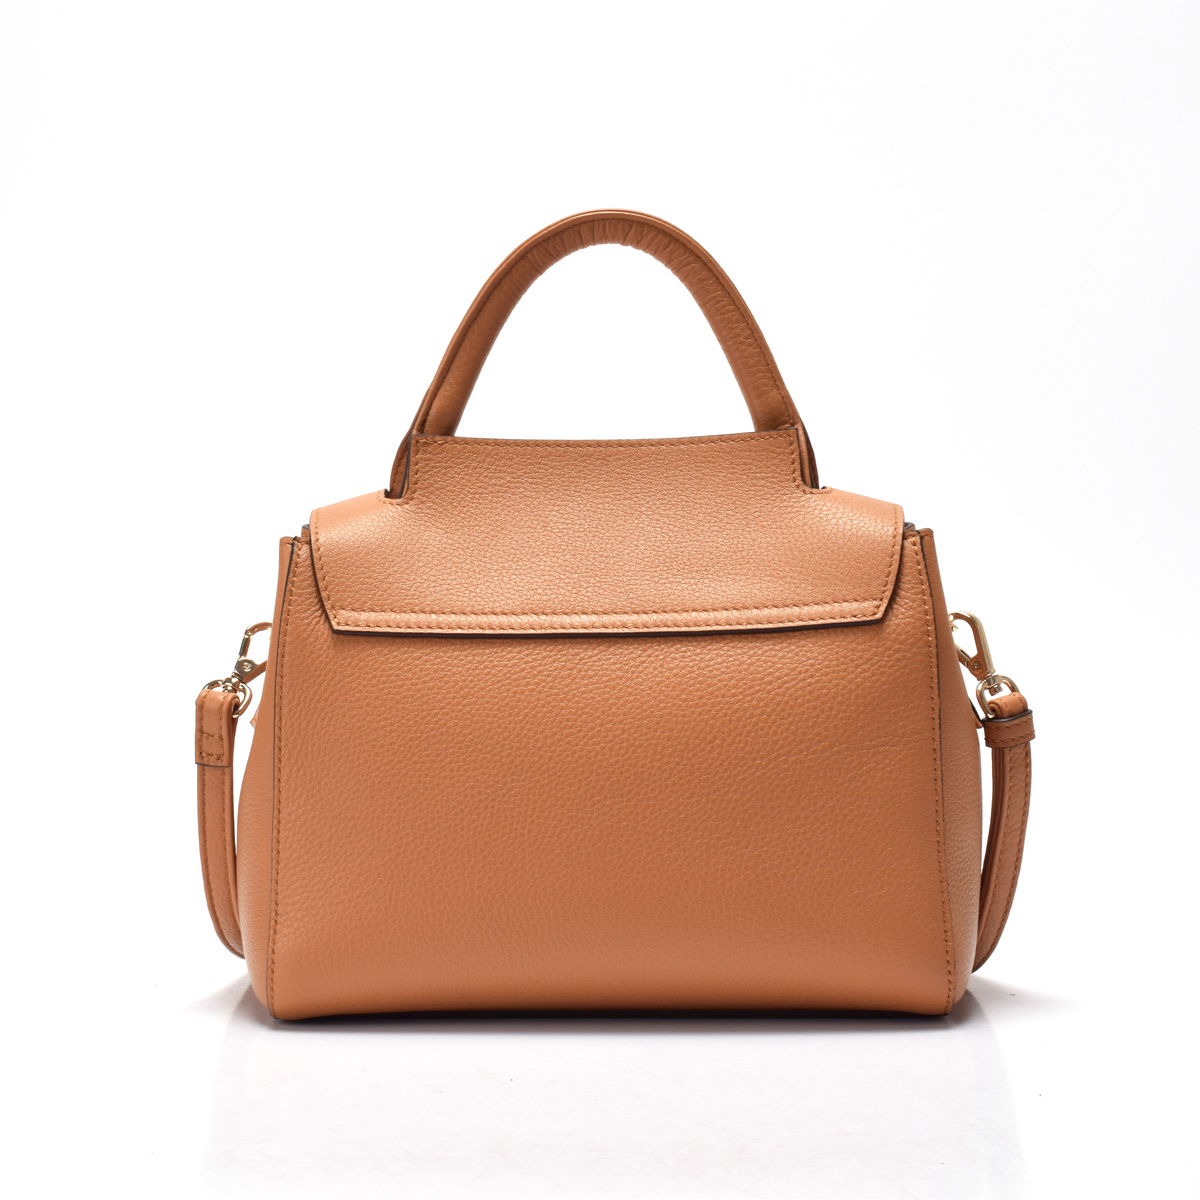 Sanlly brown brahmin handbags Supply for girls-1